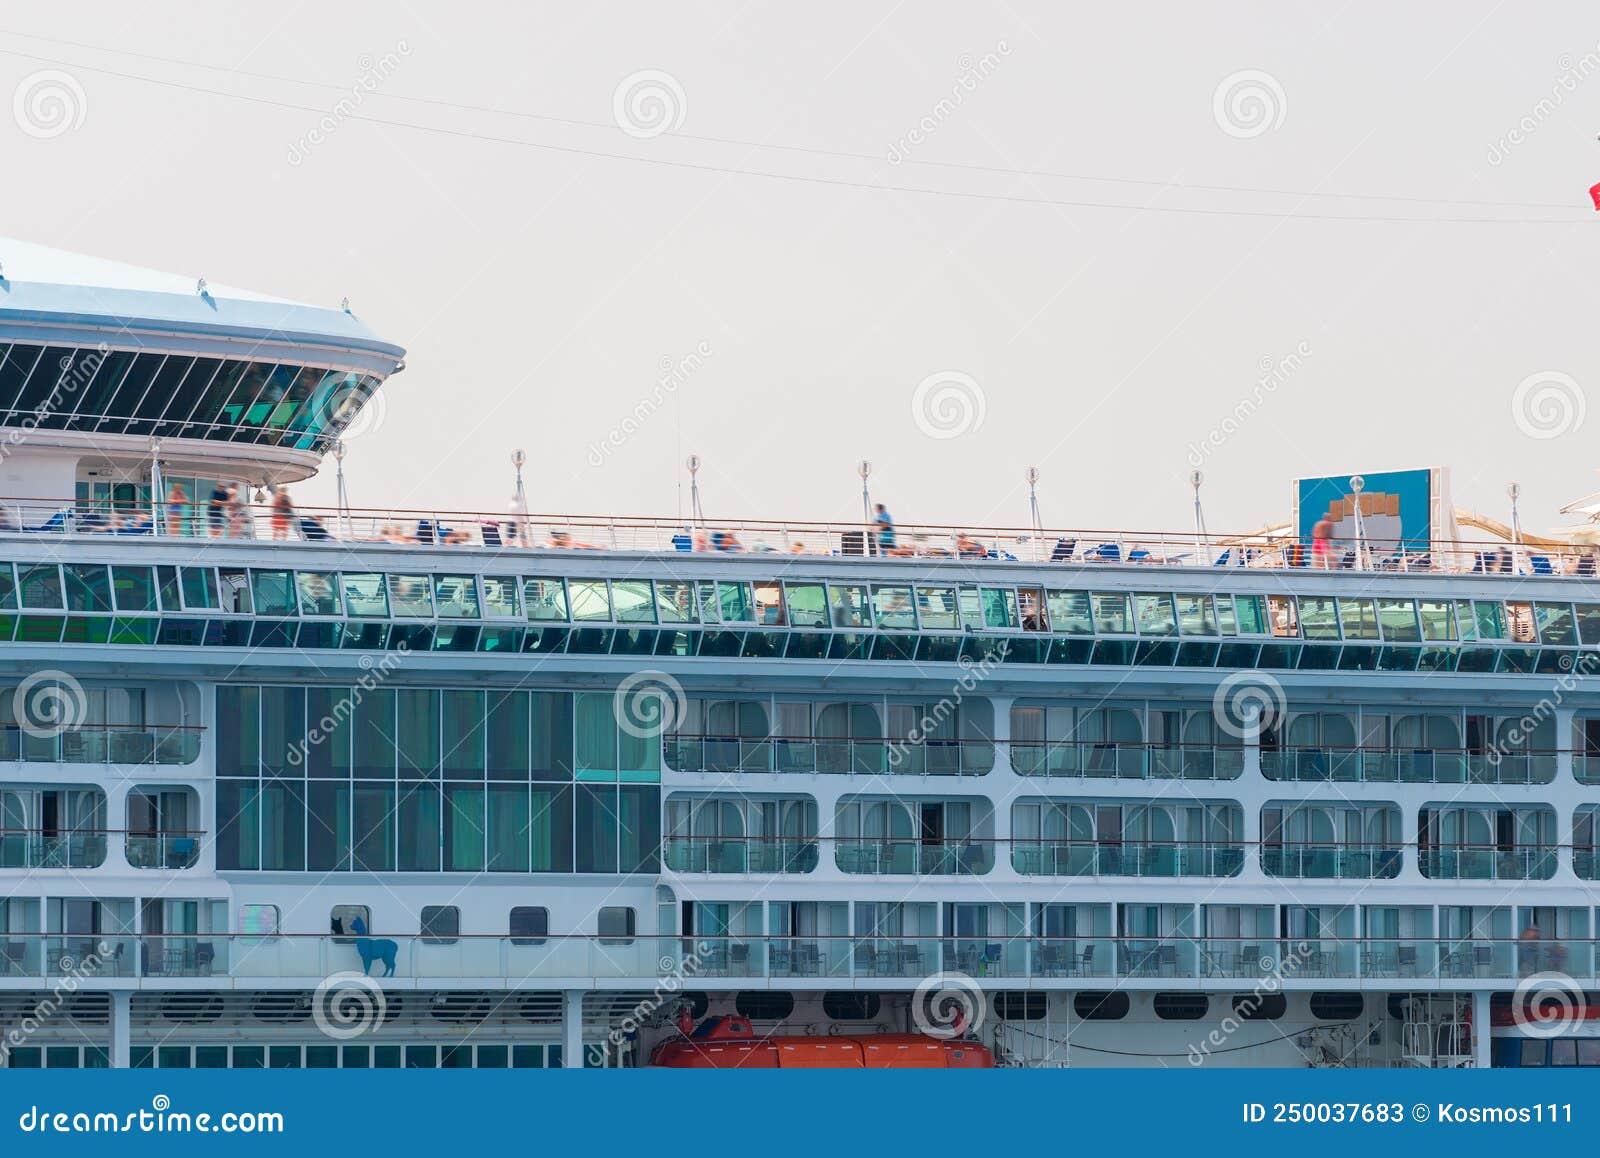 big cruise ship close-up in the sea